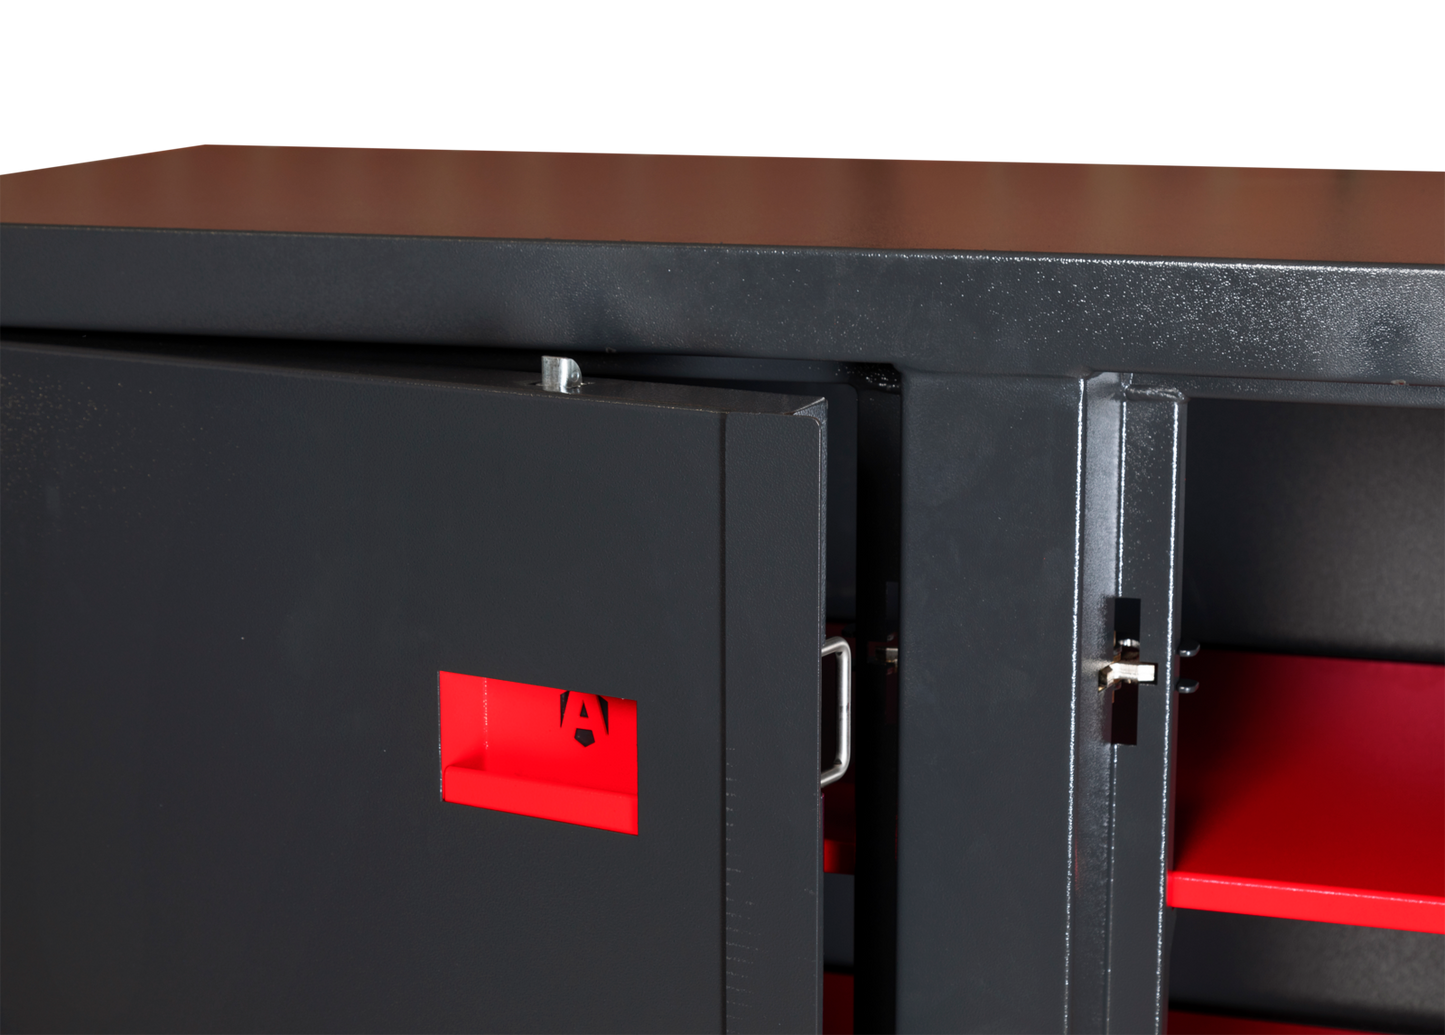 Job box, Vertical Jobsite Storage Box by ArmorGard- Siteboss Cabinet